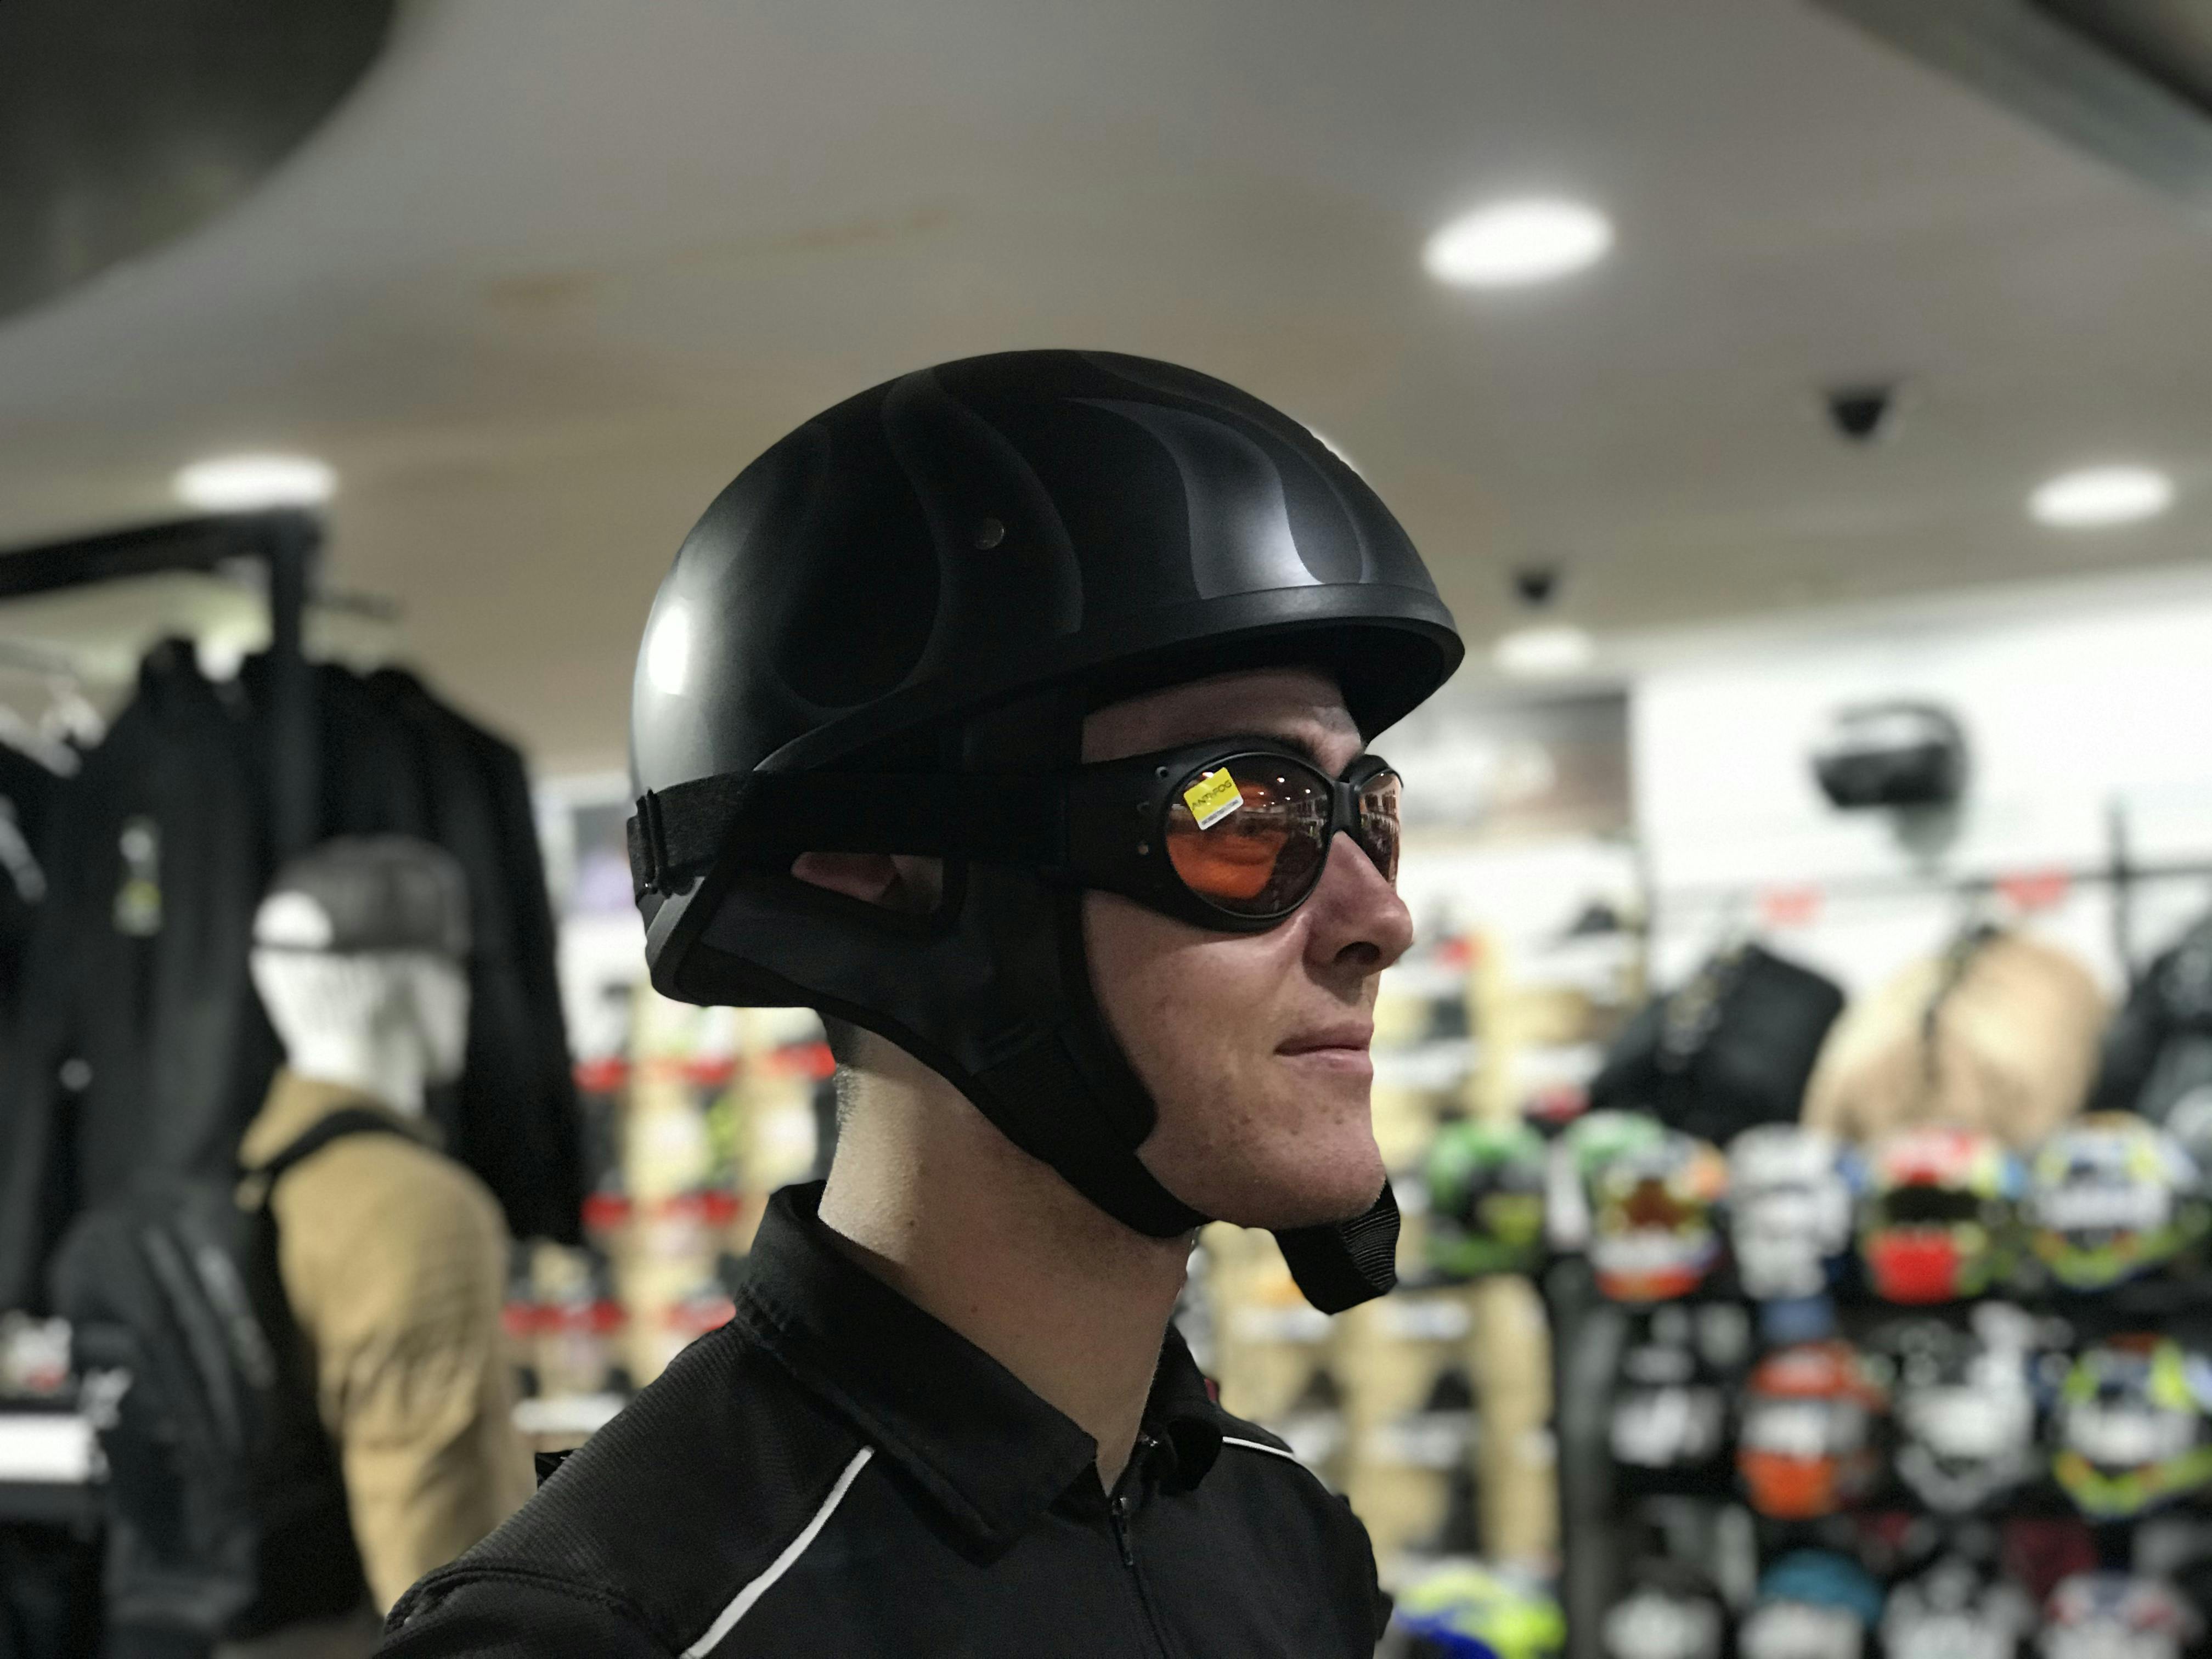 Half face helmet with orange goggles on a man